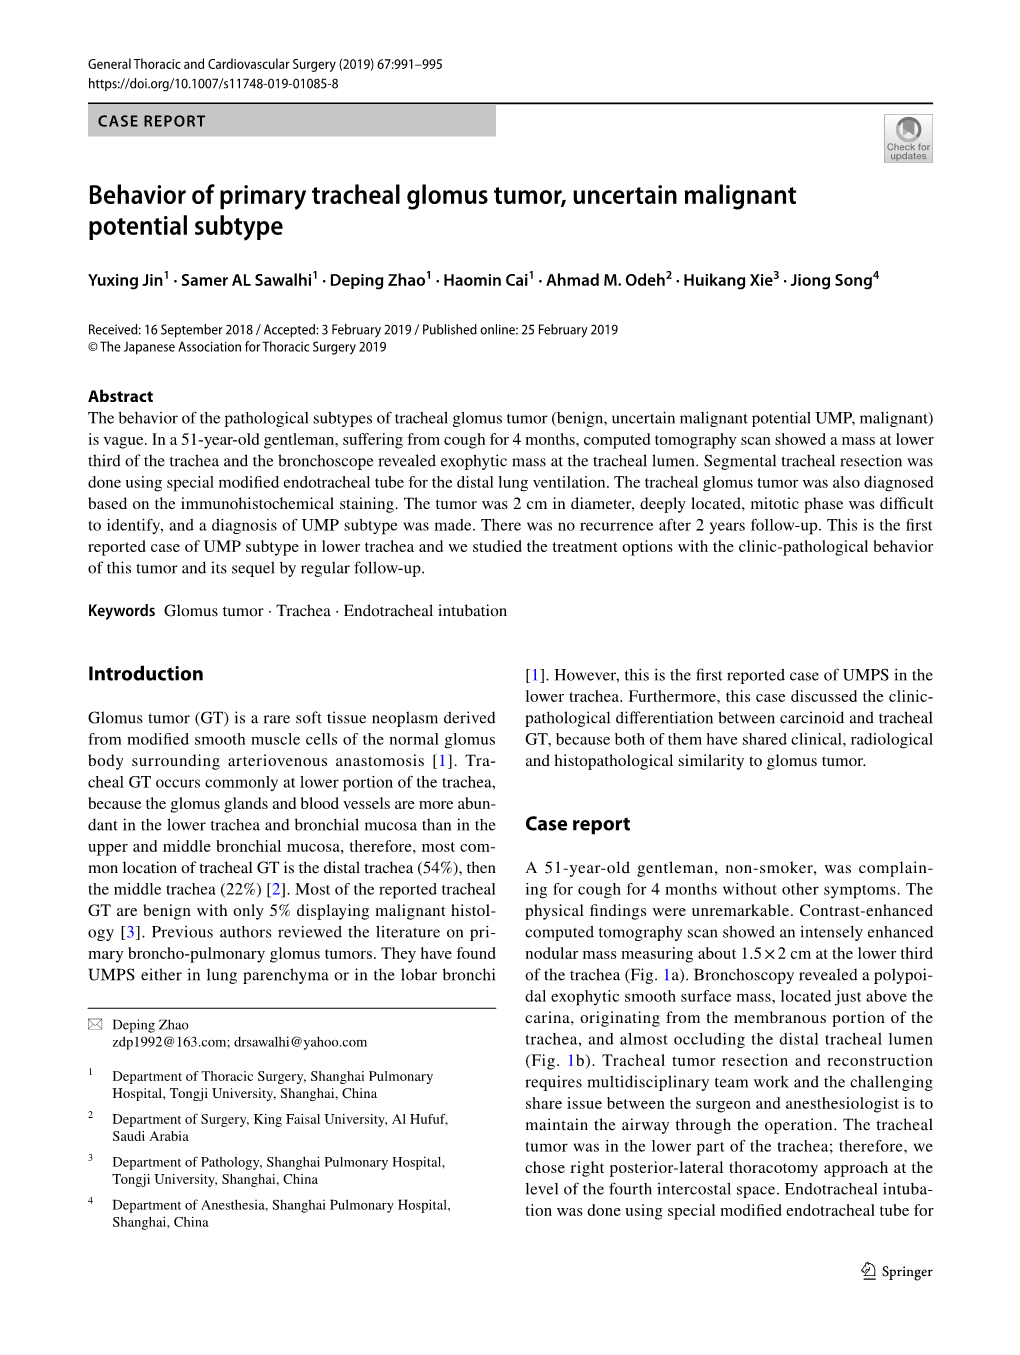 Behavior of Primary Tracheal Glomus Tumor, Uncertain Malignant Potential Subtype